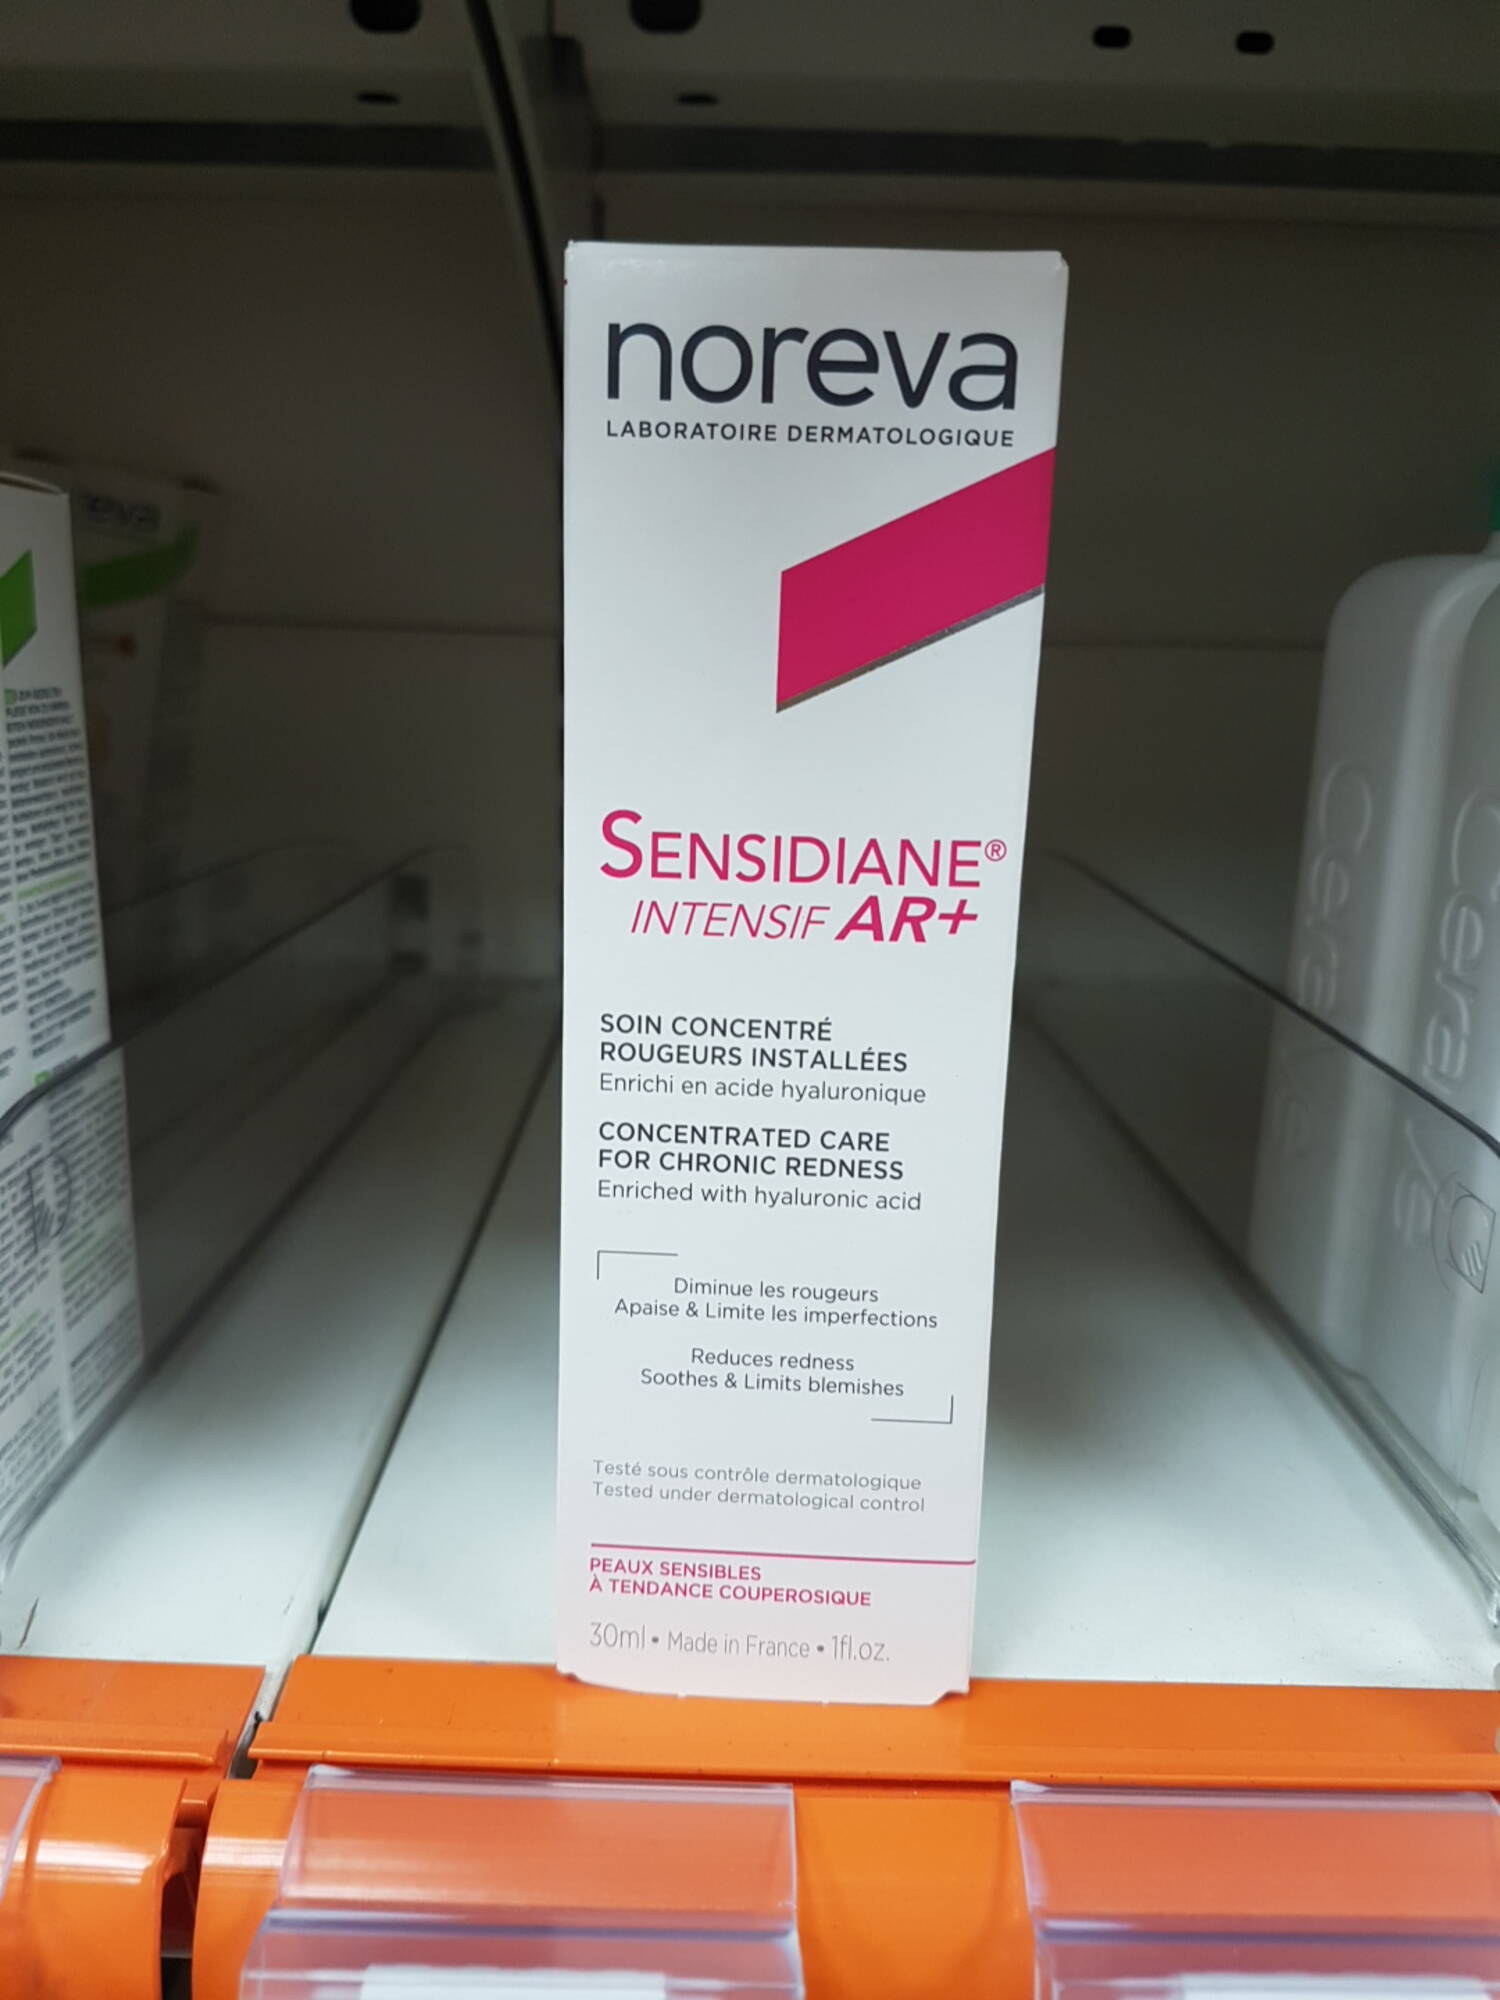 NOREVA - Sensidiane intensif AR+ - Soin concentré rougeurs installées